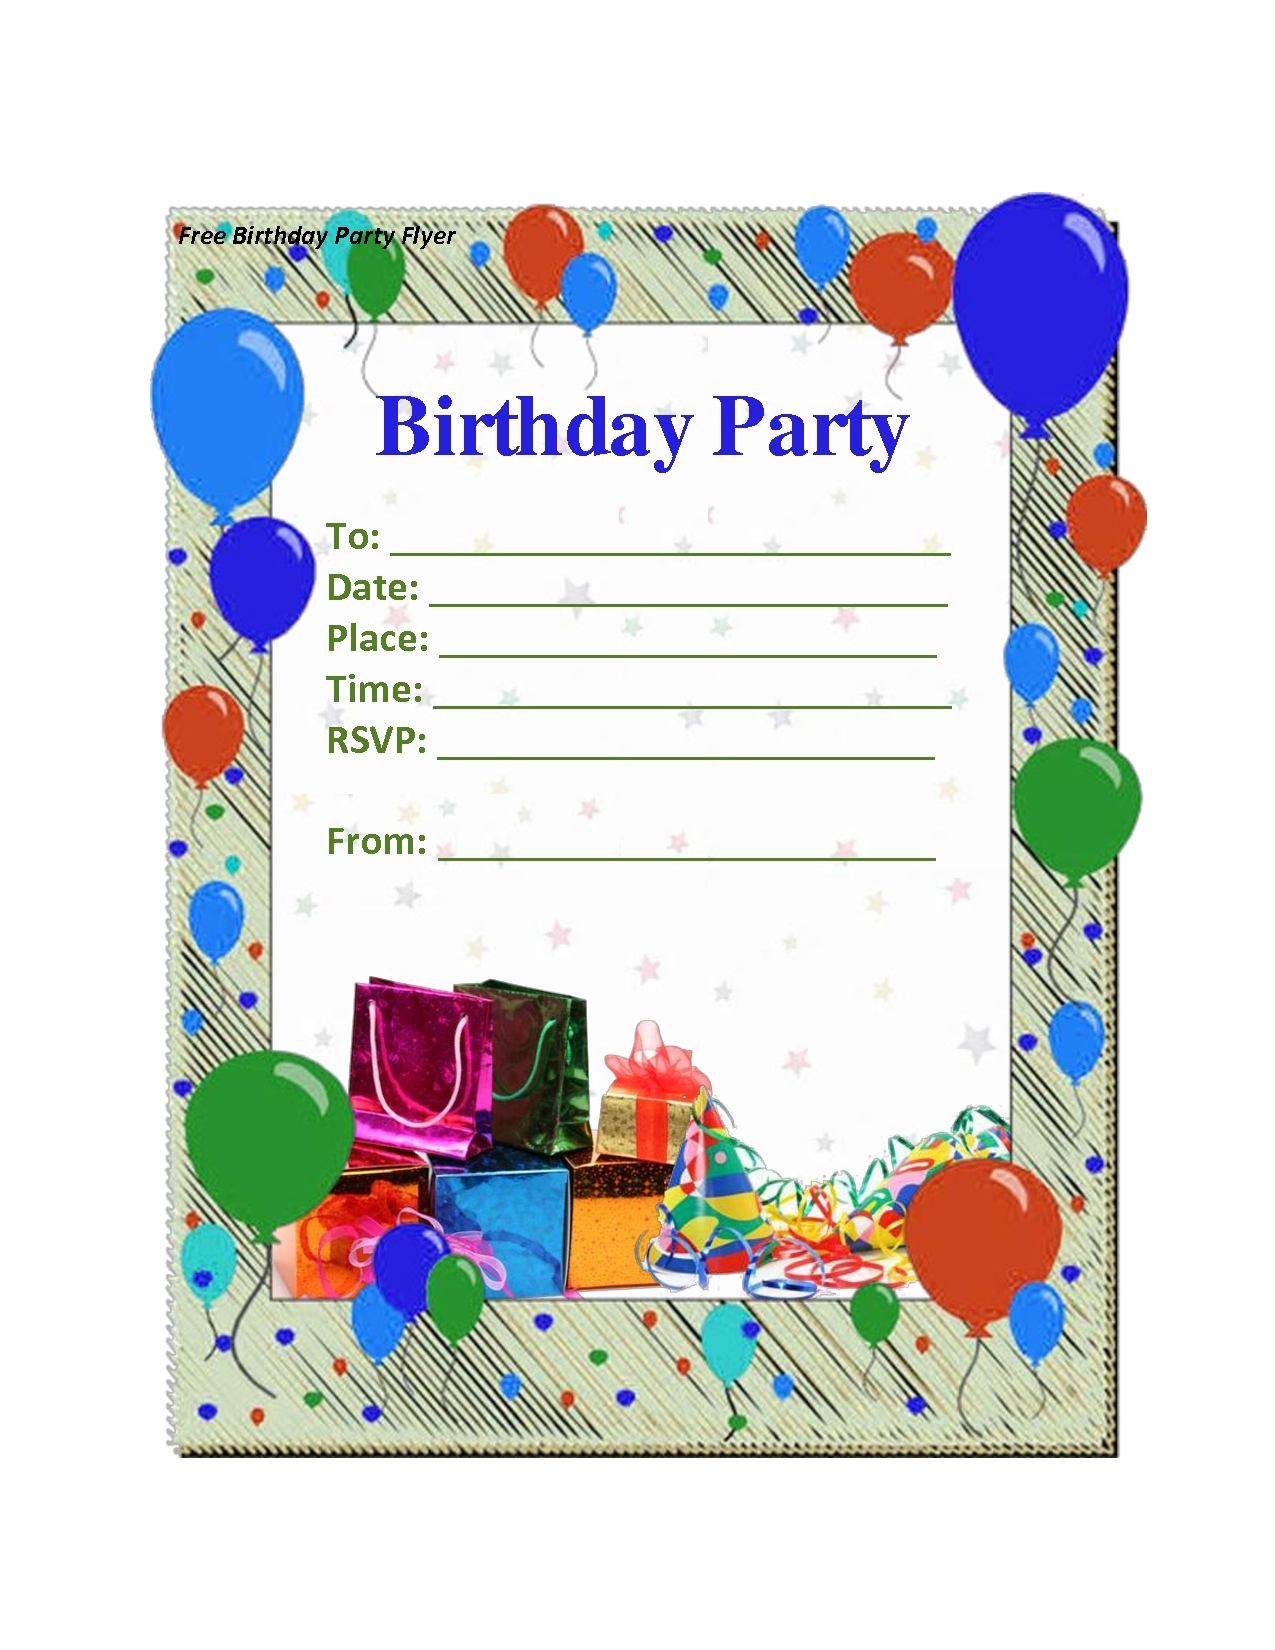 Birthday Card Invitations Ideas Birthday Card Invitations Templates Birthday Invitation Examples